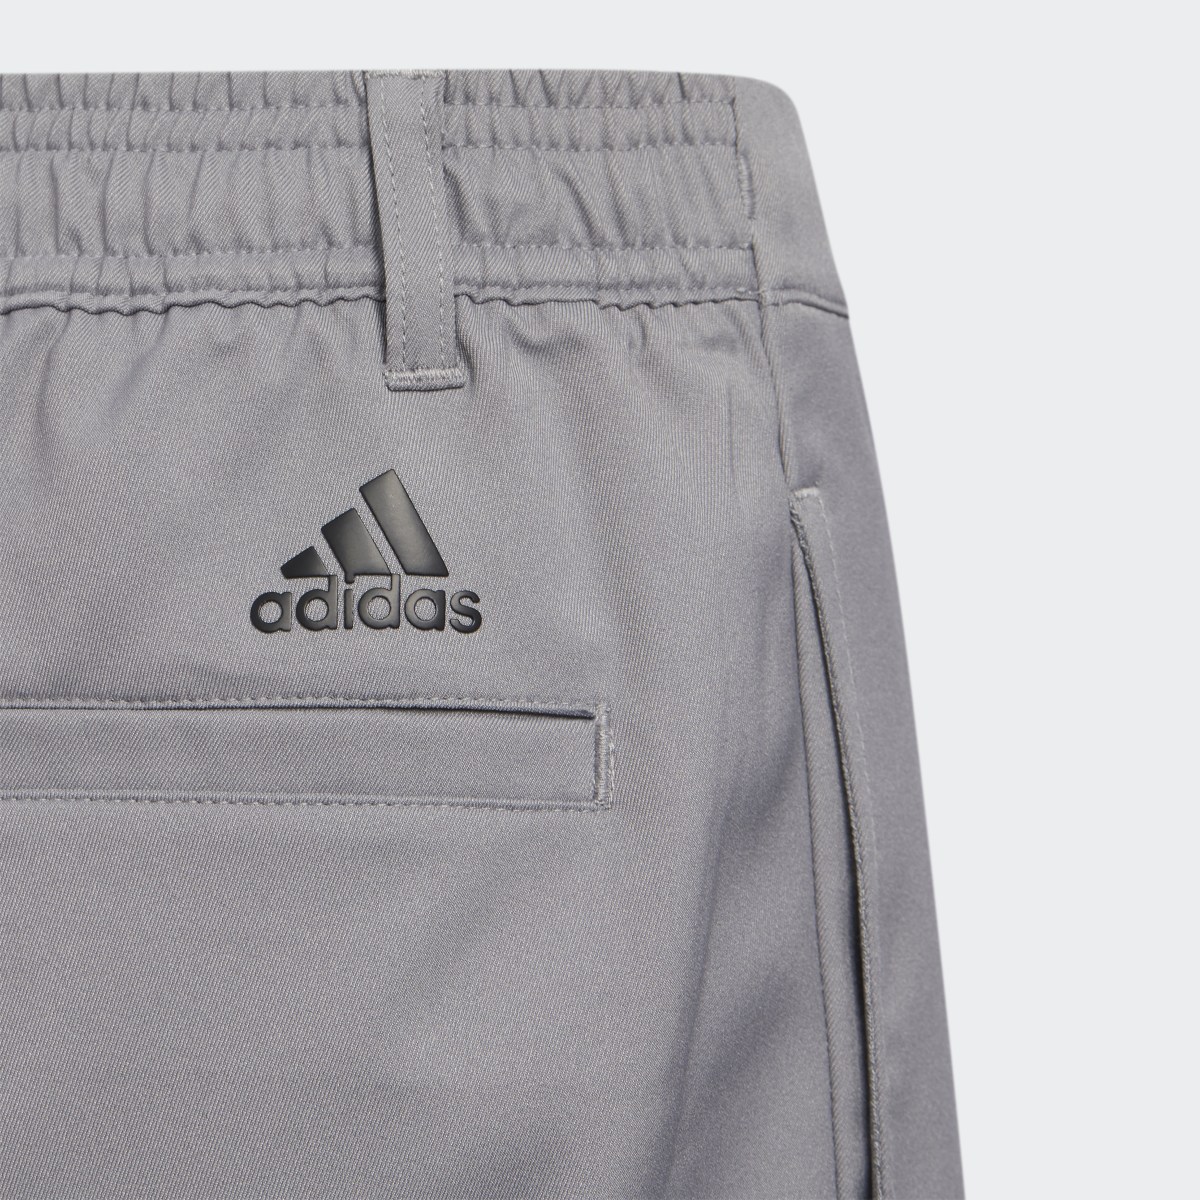 Adidas Ultimate365 Adjustable Golf Shorts. 5